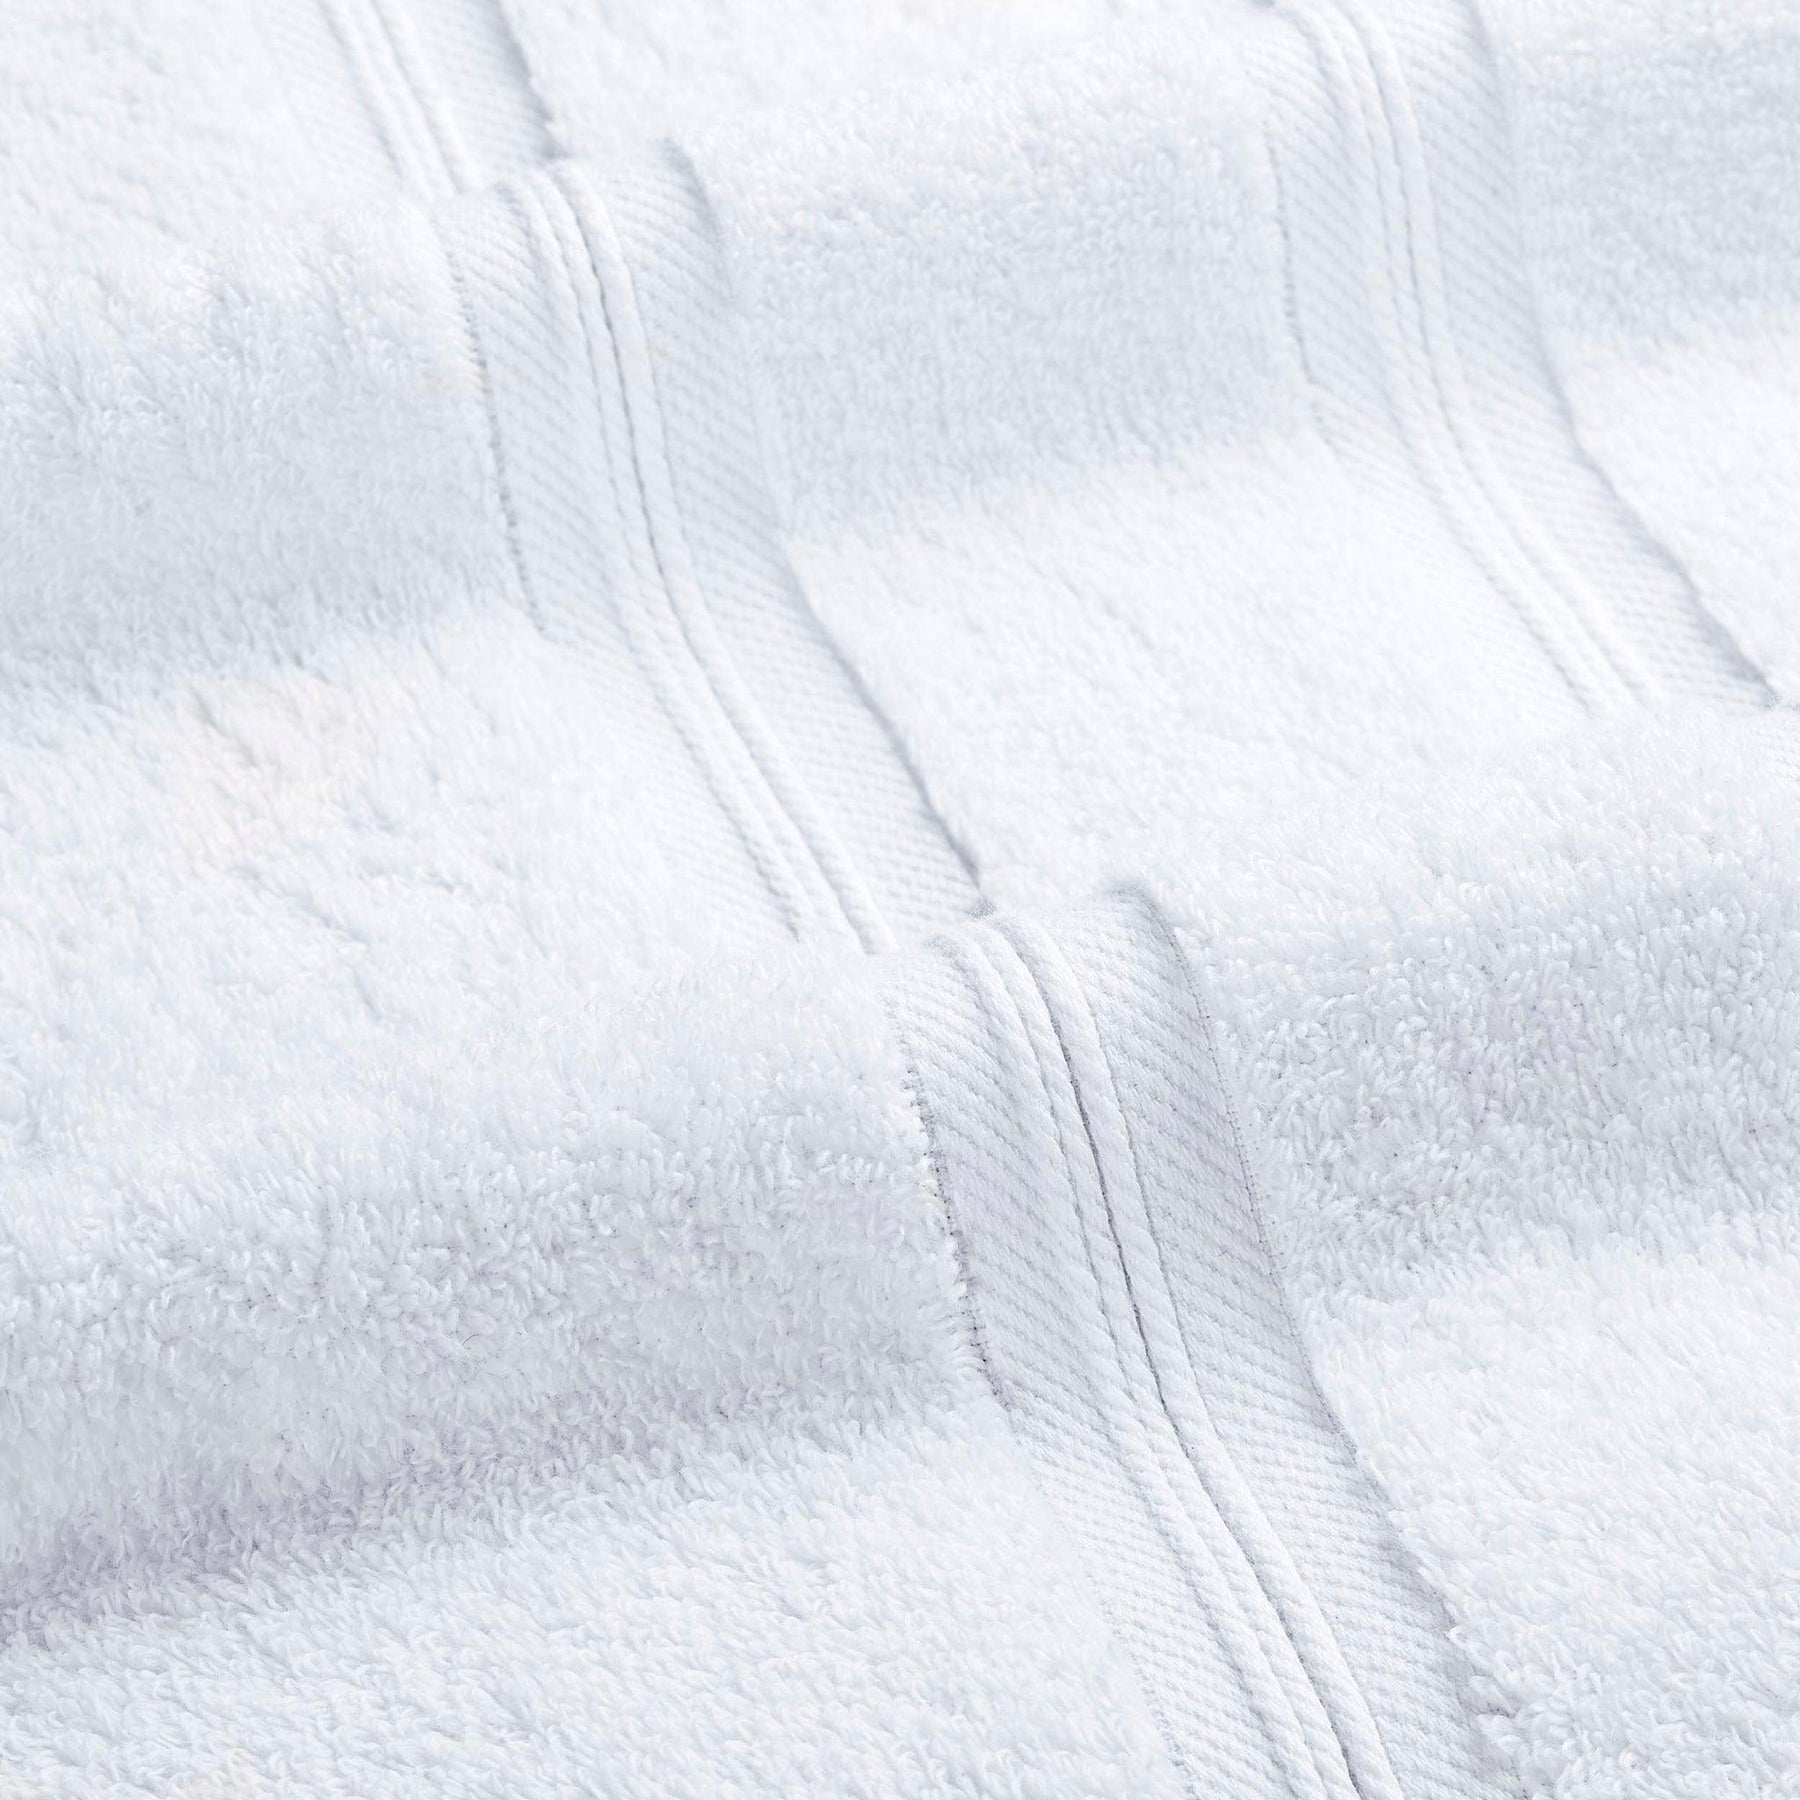  Superior Smart Dry Zero Twist Cotton 4-Piece Bath Towel Set - White